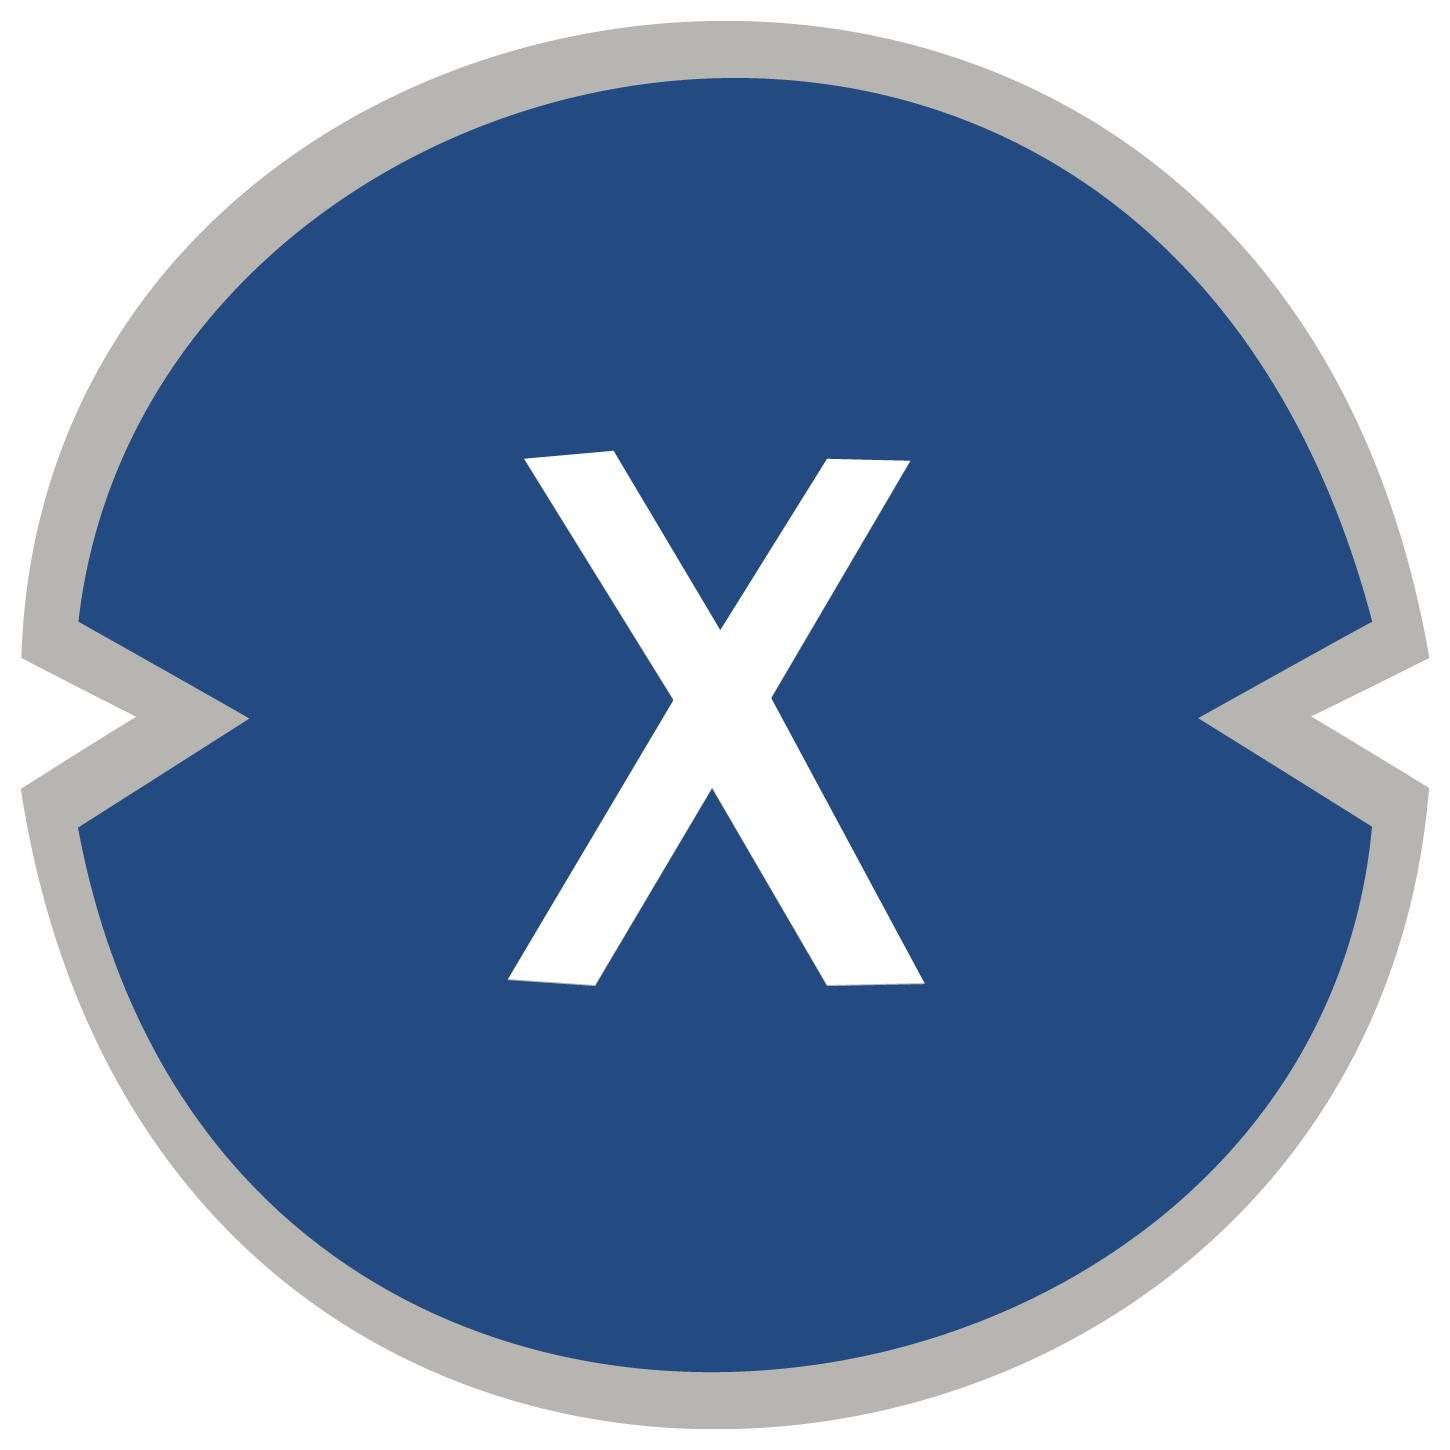 XDC Network logo